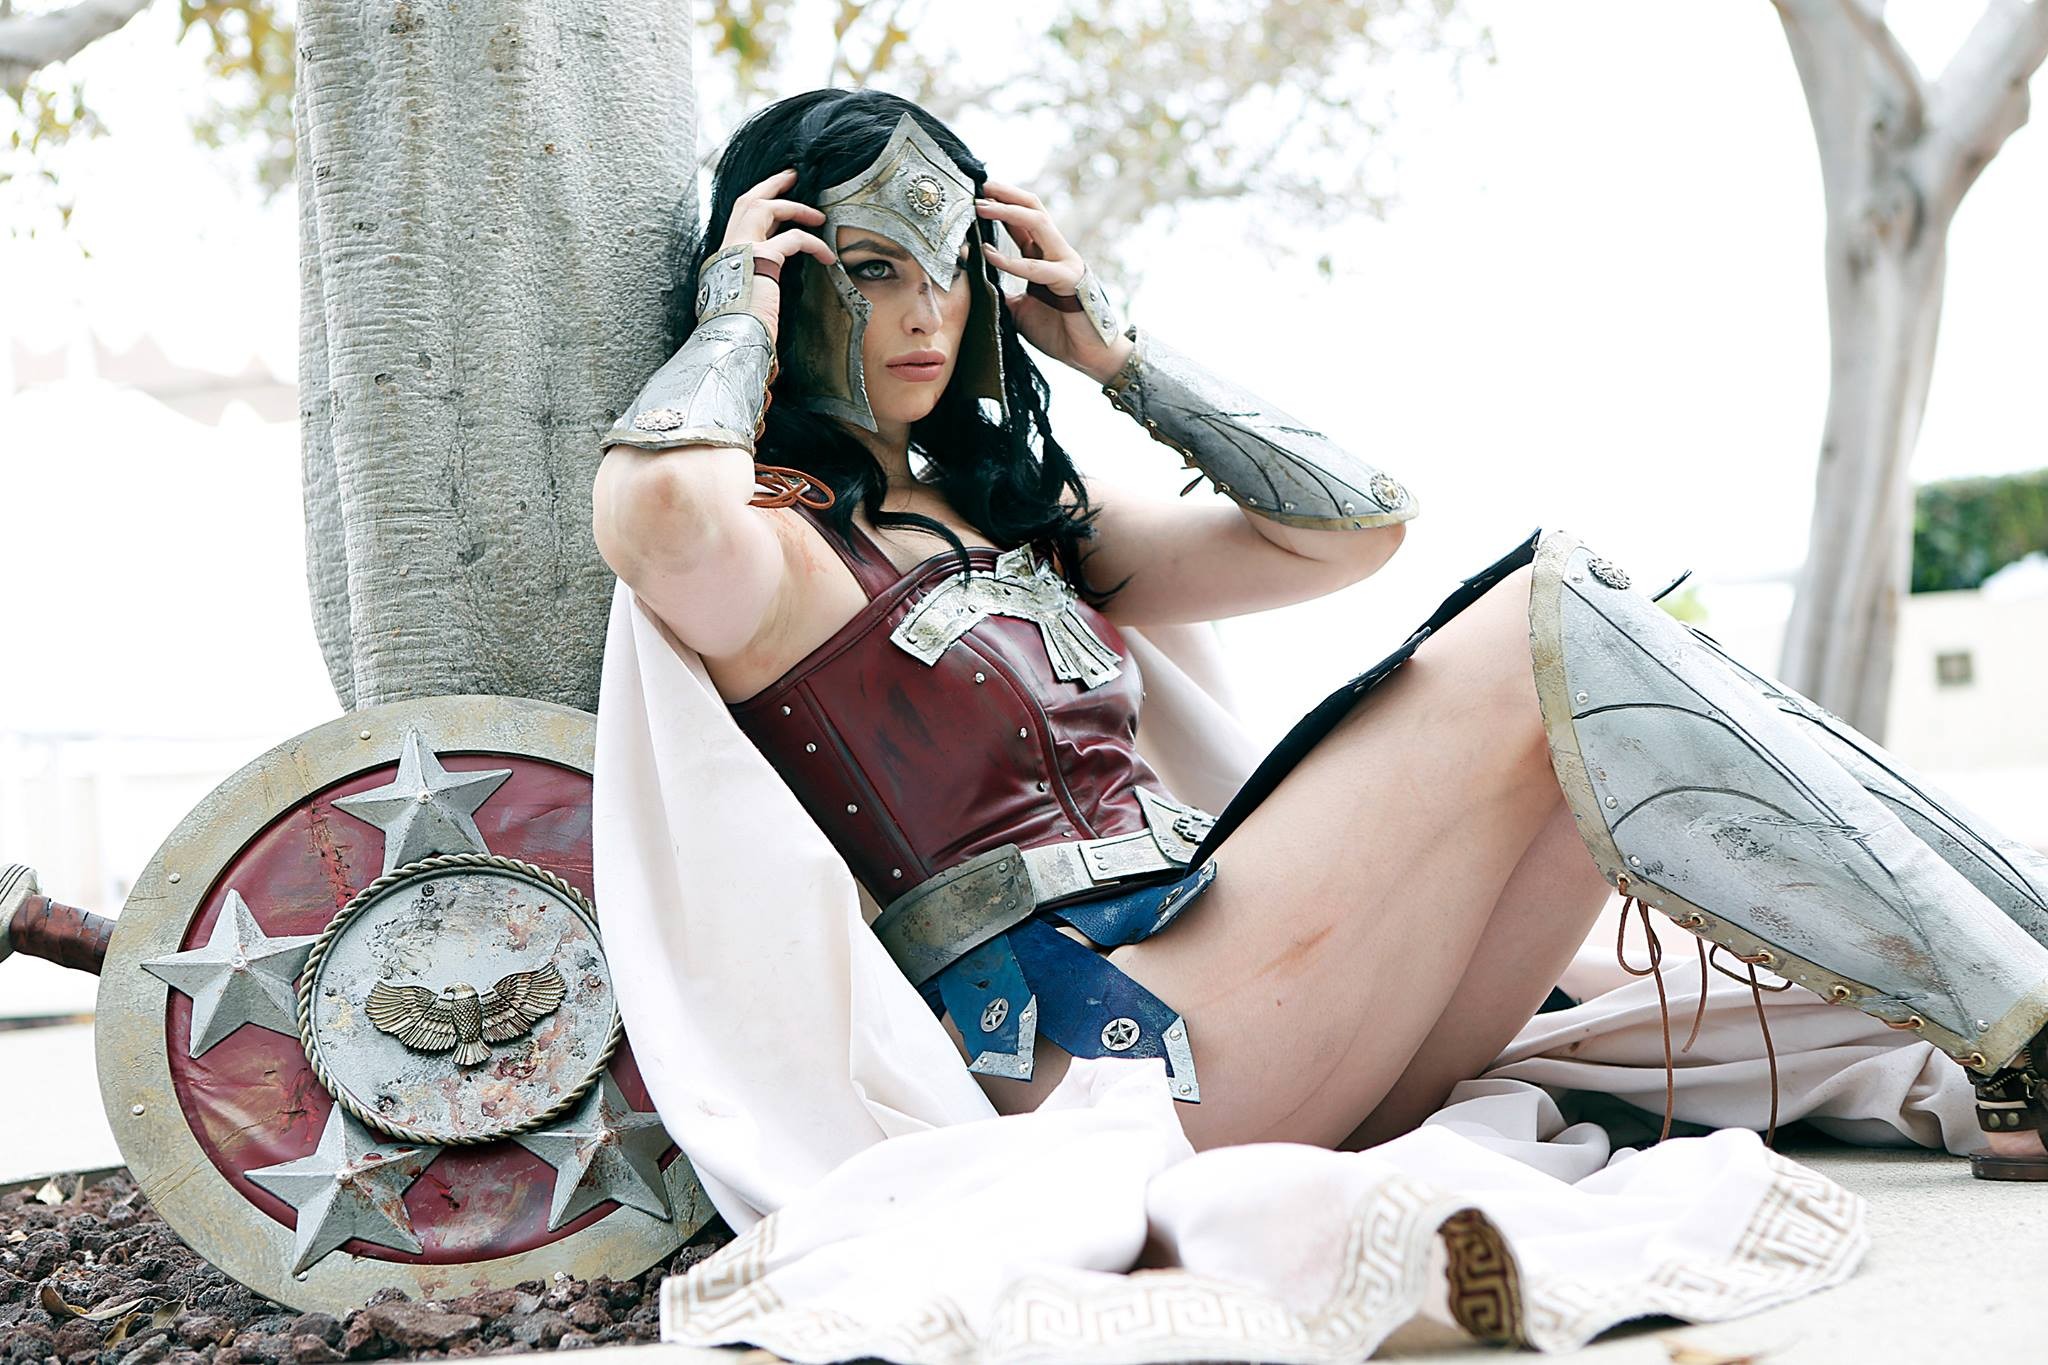 People 2048x1365 women cosplay Wonder Woman fantasy girl warrior model armored shield trees legs women outdoors outdoors